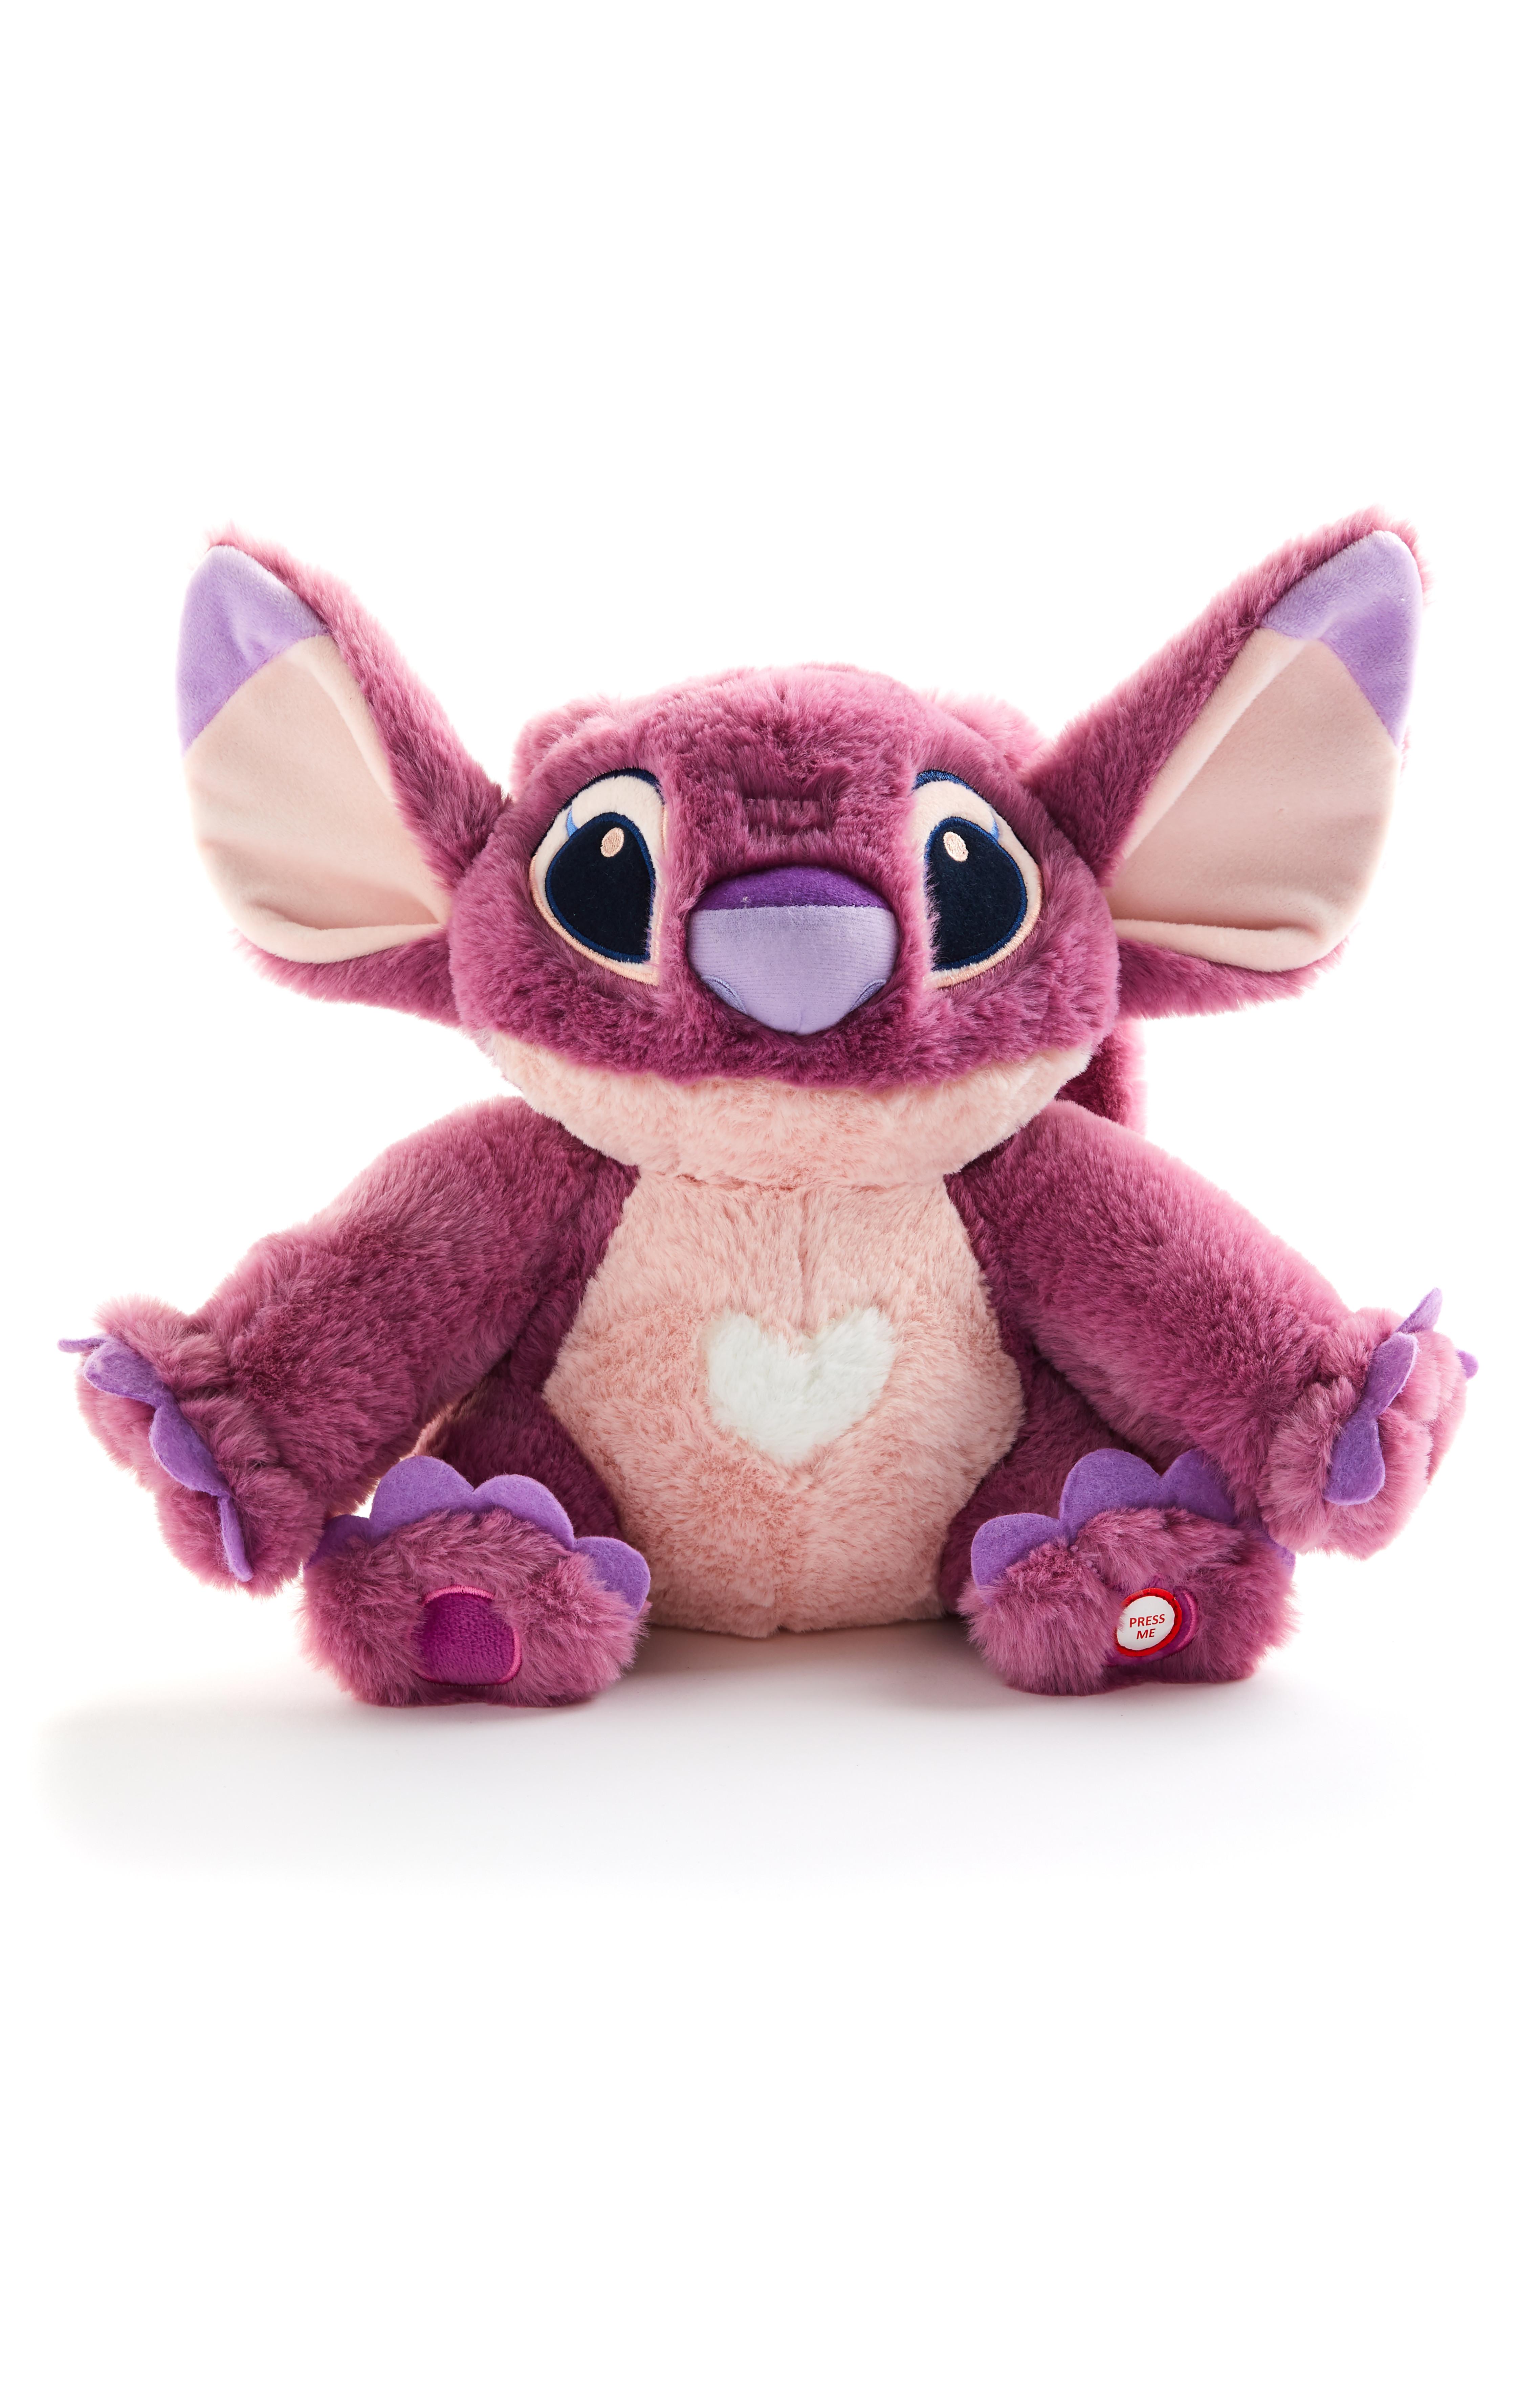 Disney LILO & Stitch Angle 30cm Medium Plush Light Up Toy Soft Toy Teddy Primark